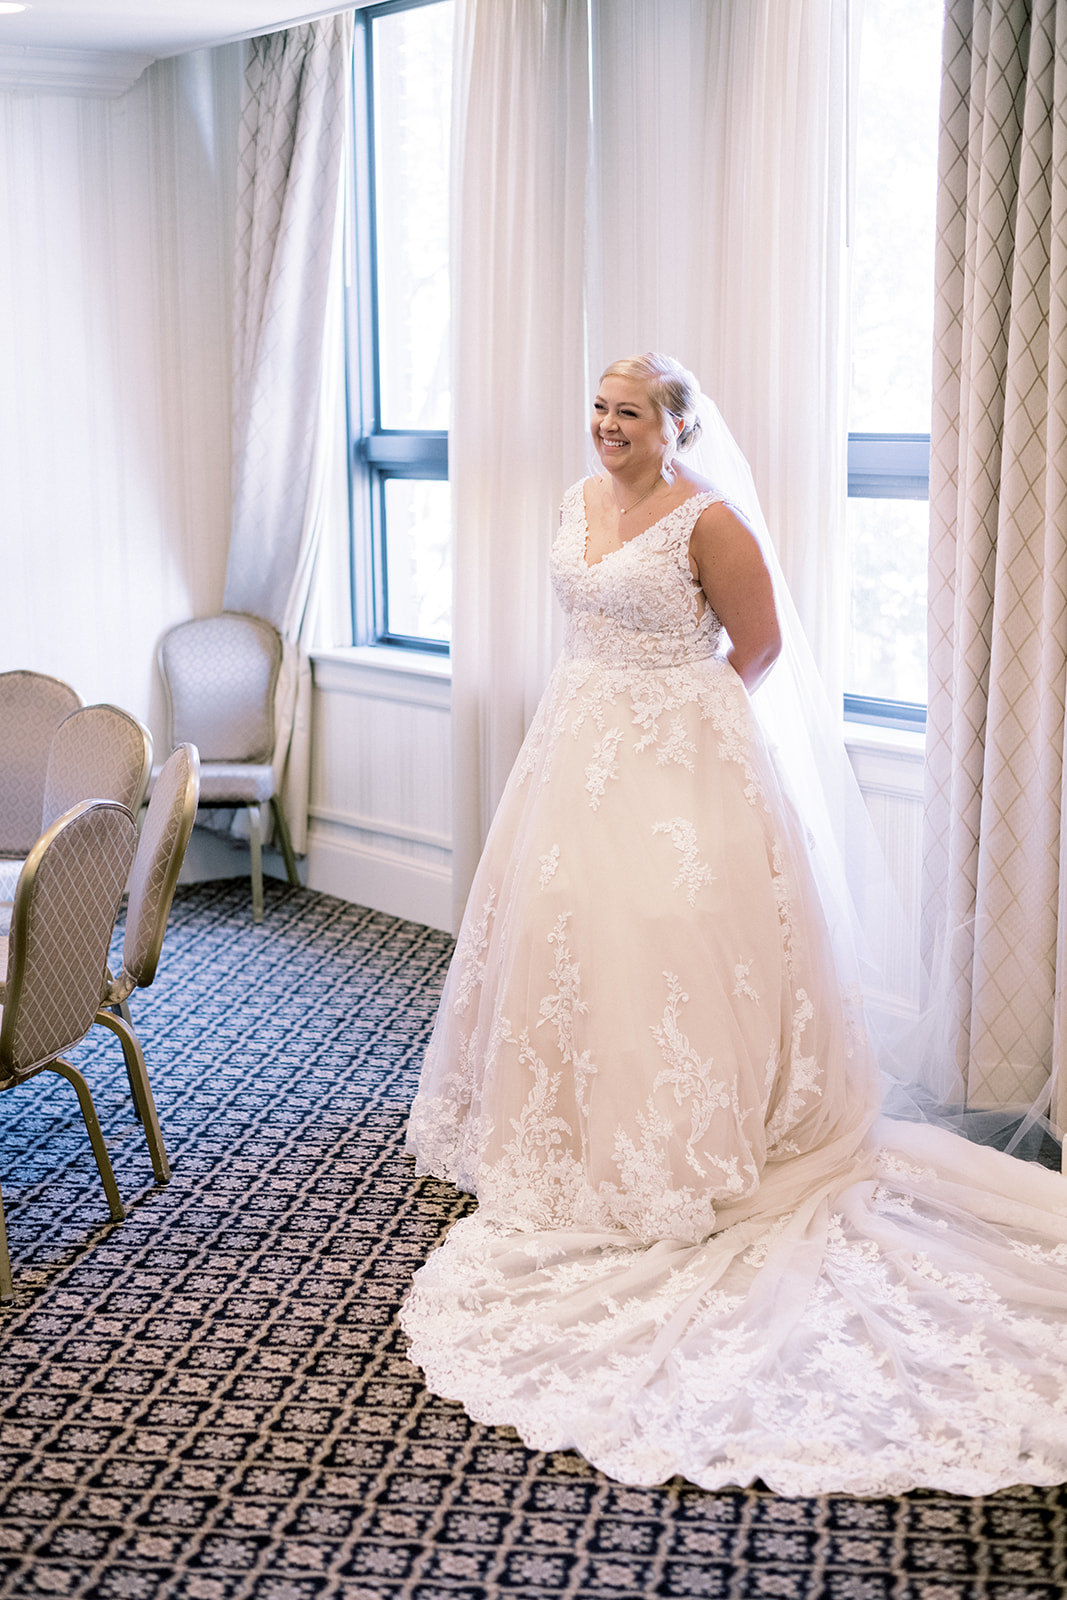 Pennsylvania wedding photographer captures bride smiling with hands behind back in wedding dress